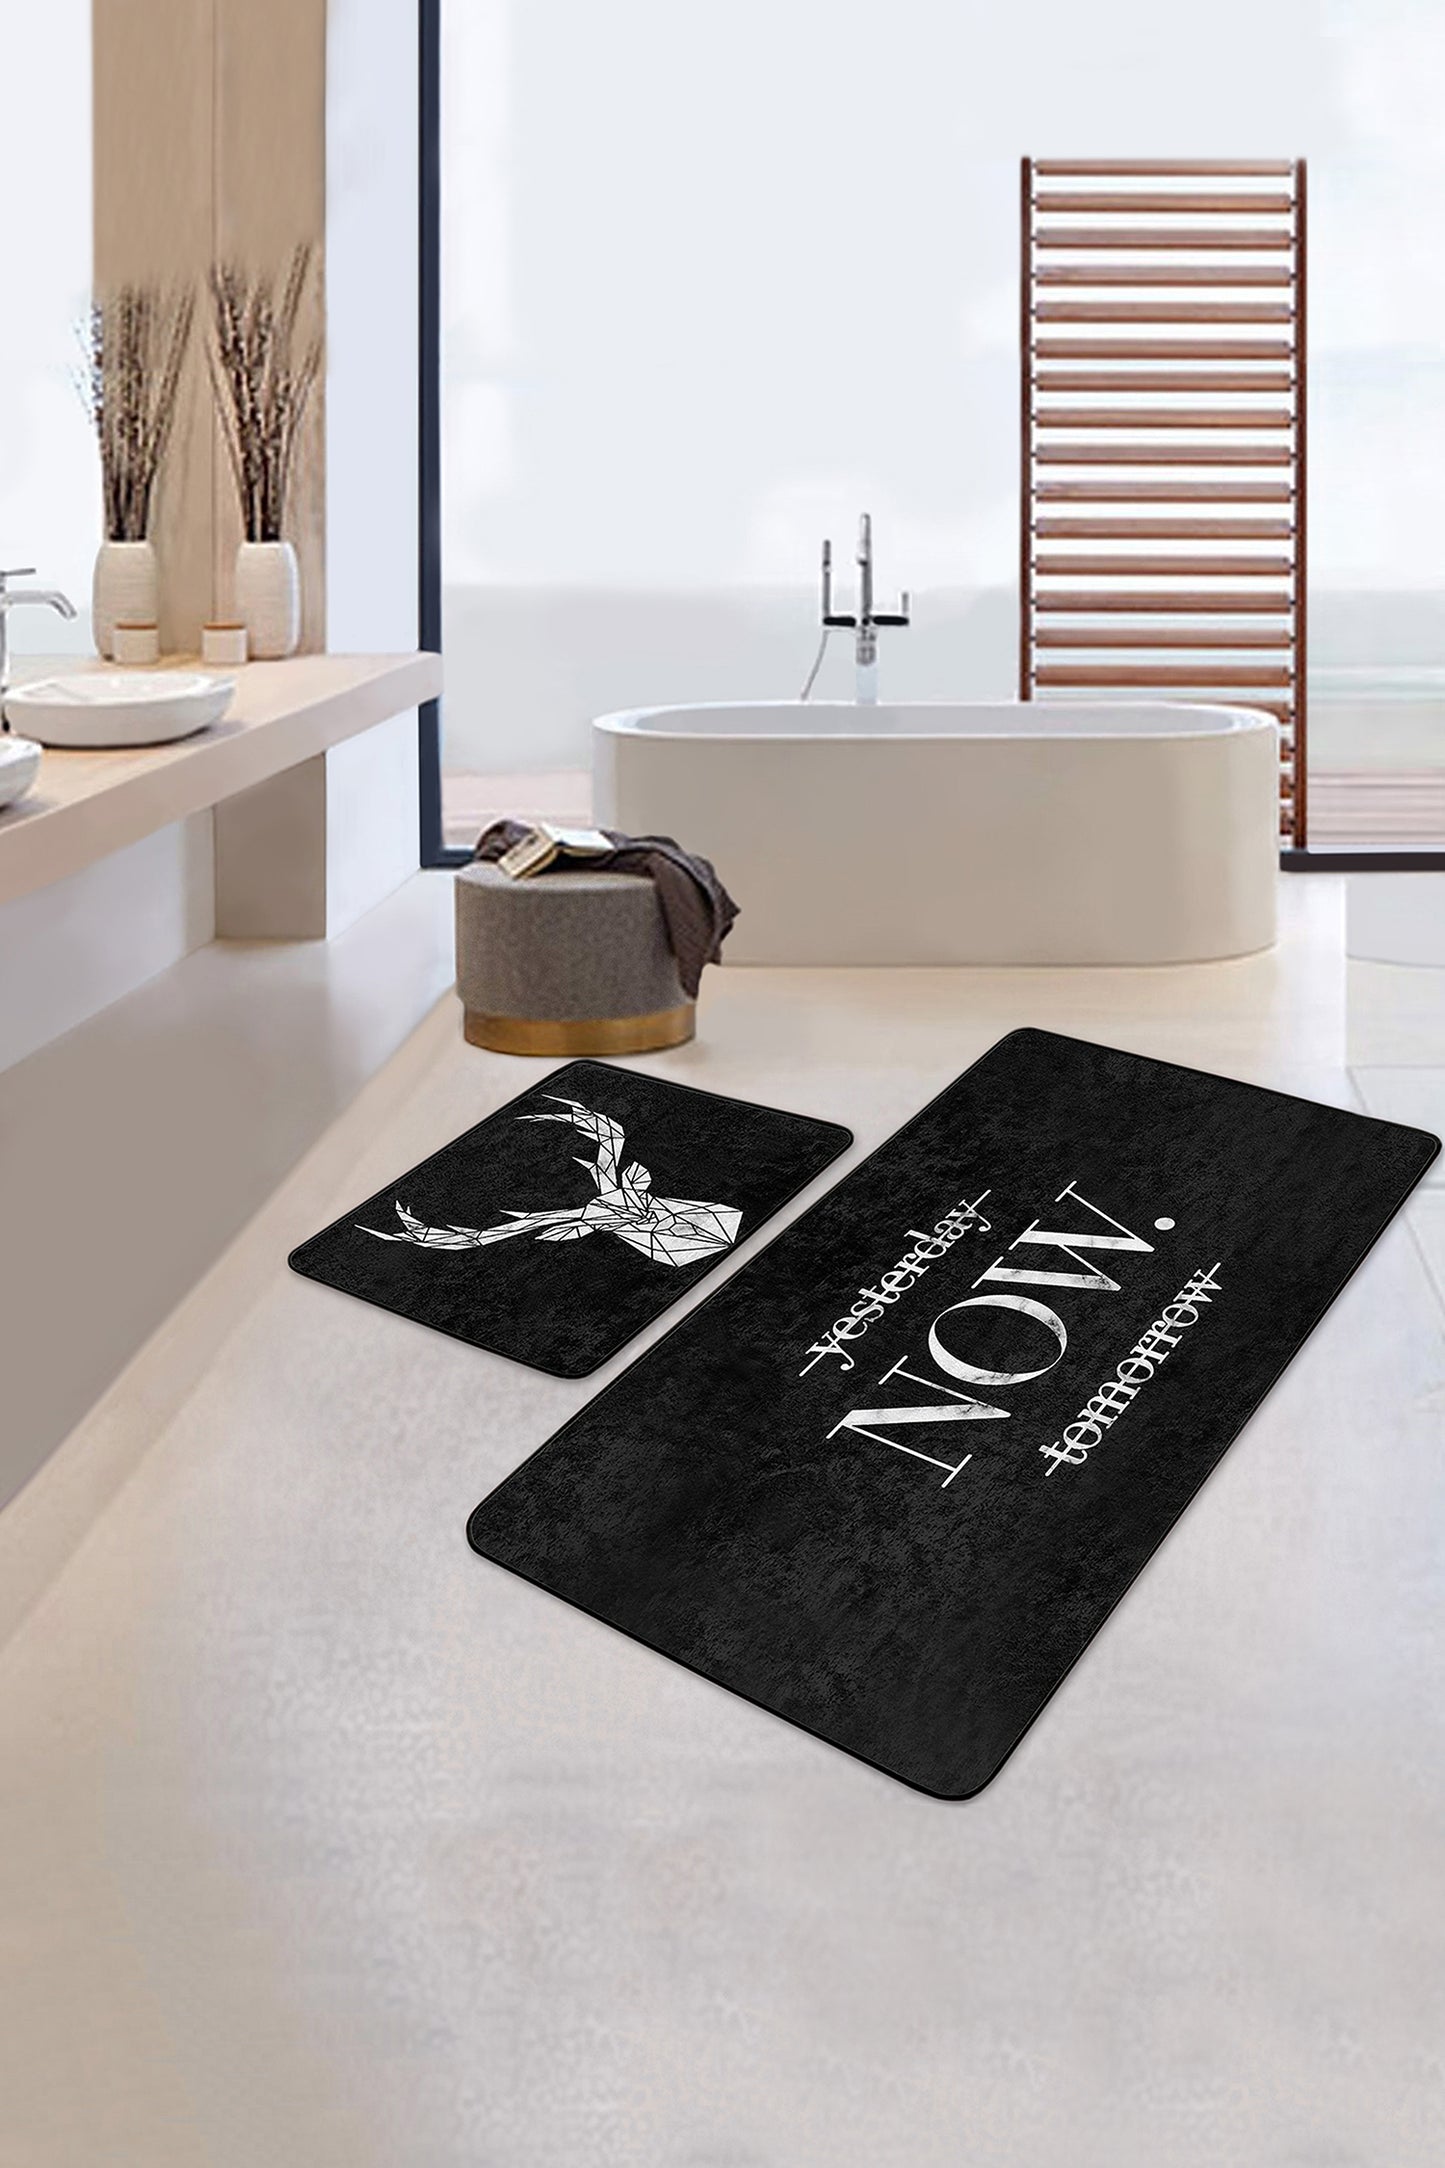 Decorative Bath Mat Set with a Charming Array of Modern Monochrome Patterns